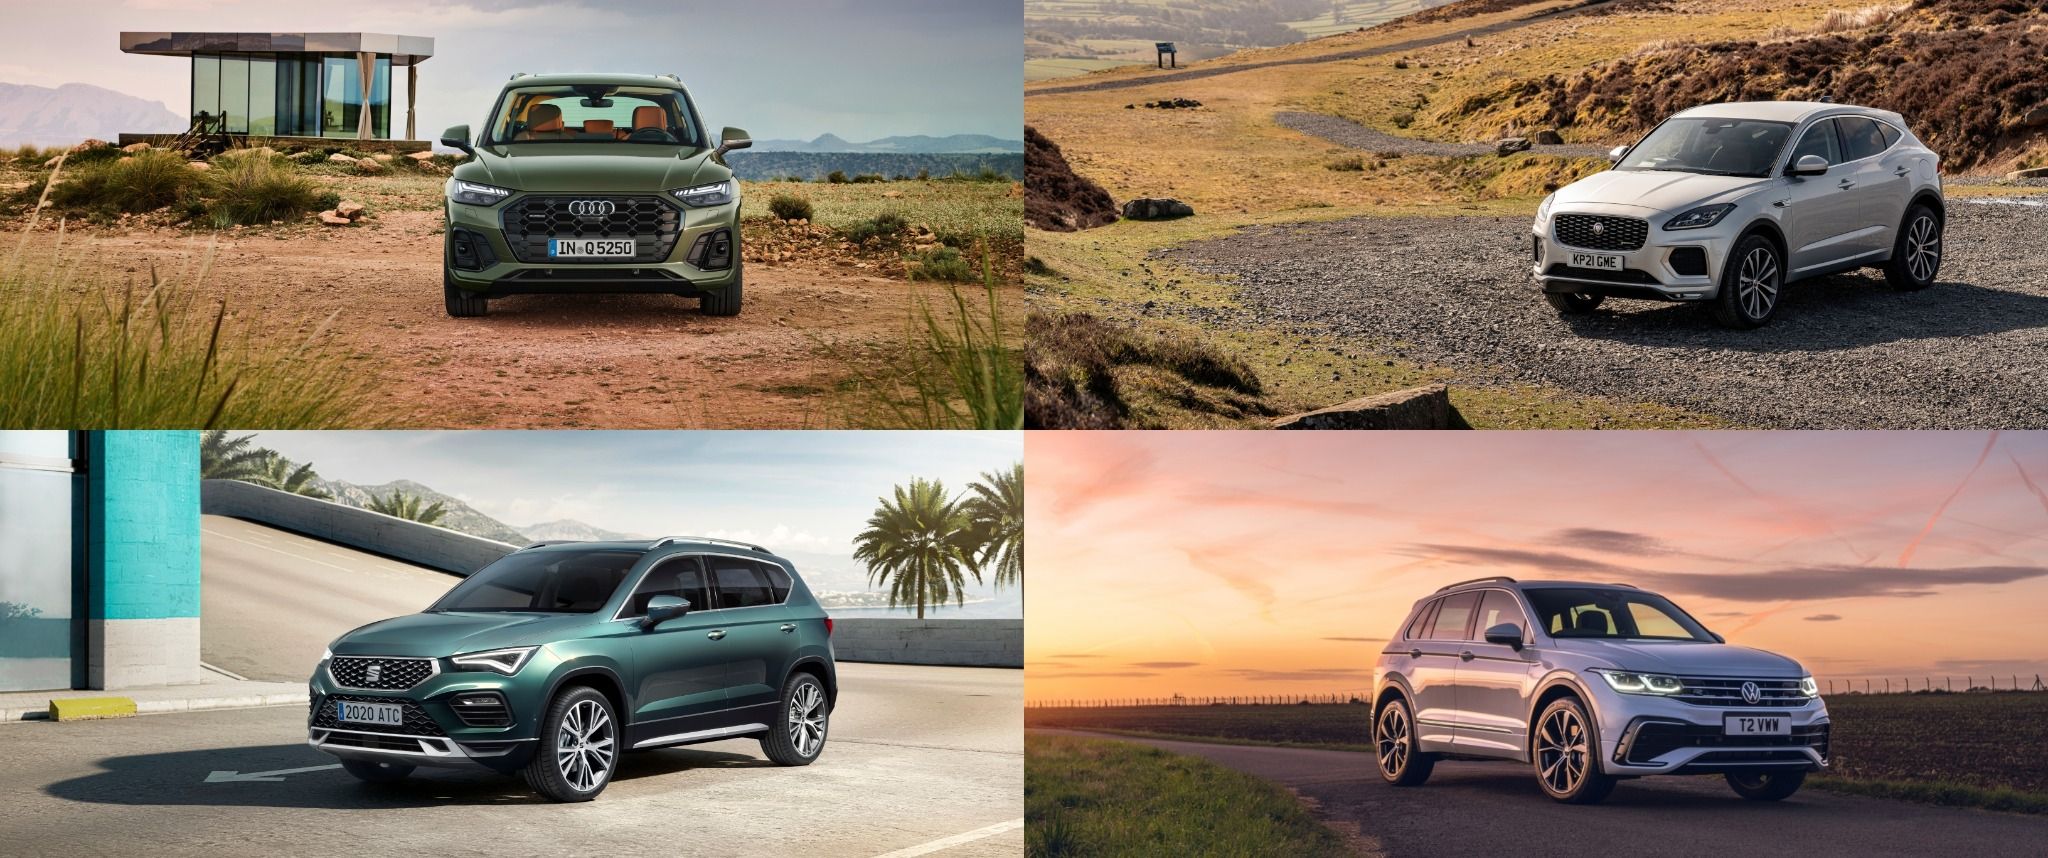 What’s the best mid-size SUV? Seat Ateca, Volkswagen Tiguan, Jaguar E-Pace, Audi Q5 image